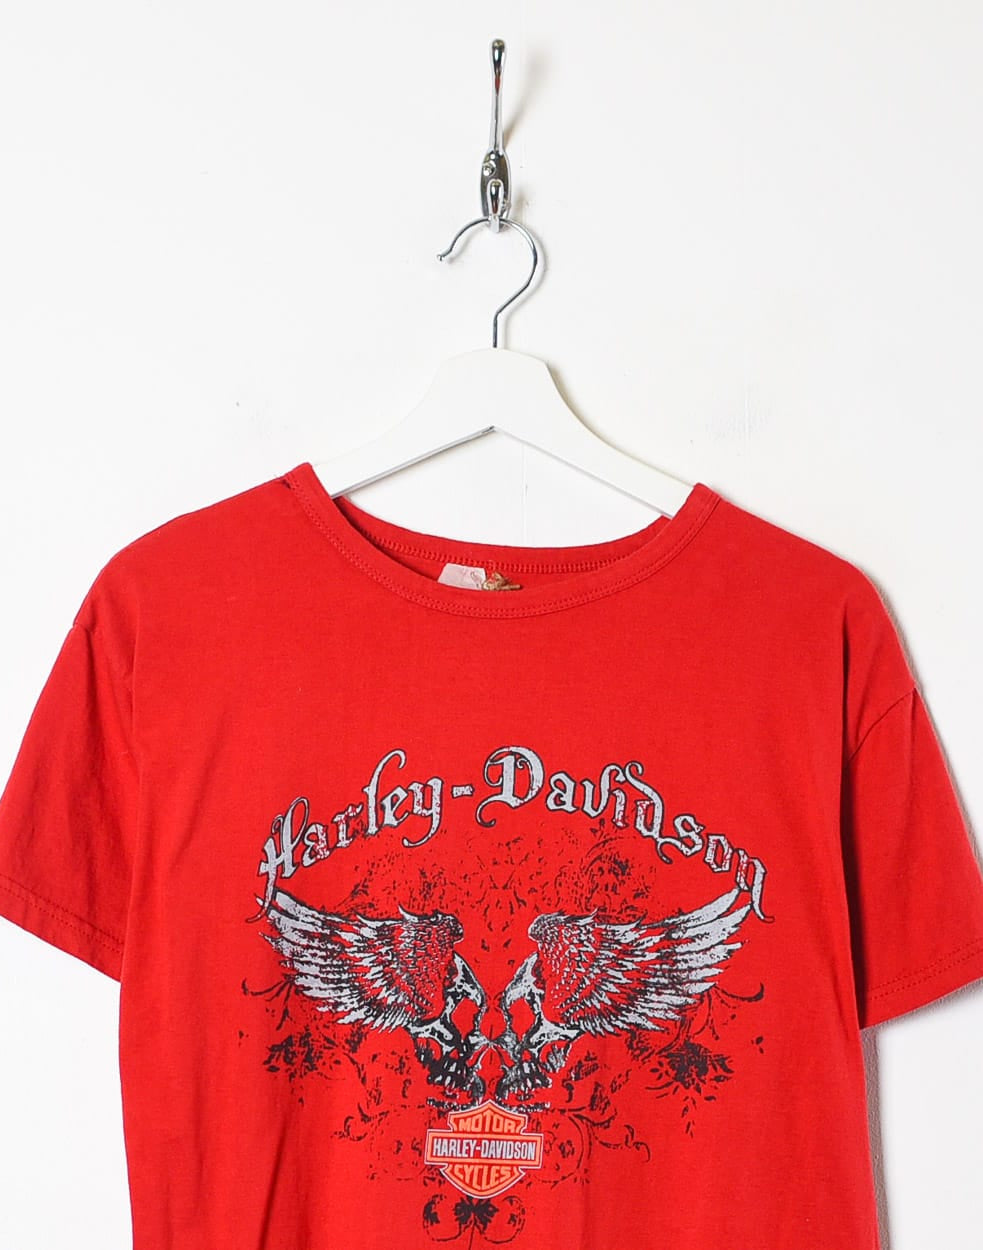 Red Harley-Davidson Graphic T-Shirt - Medium Women's